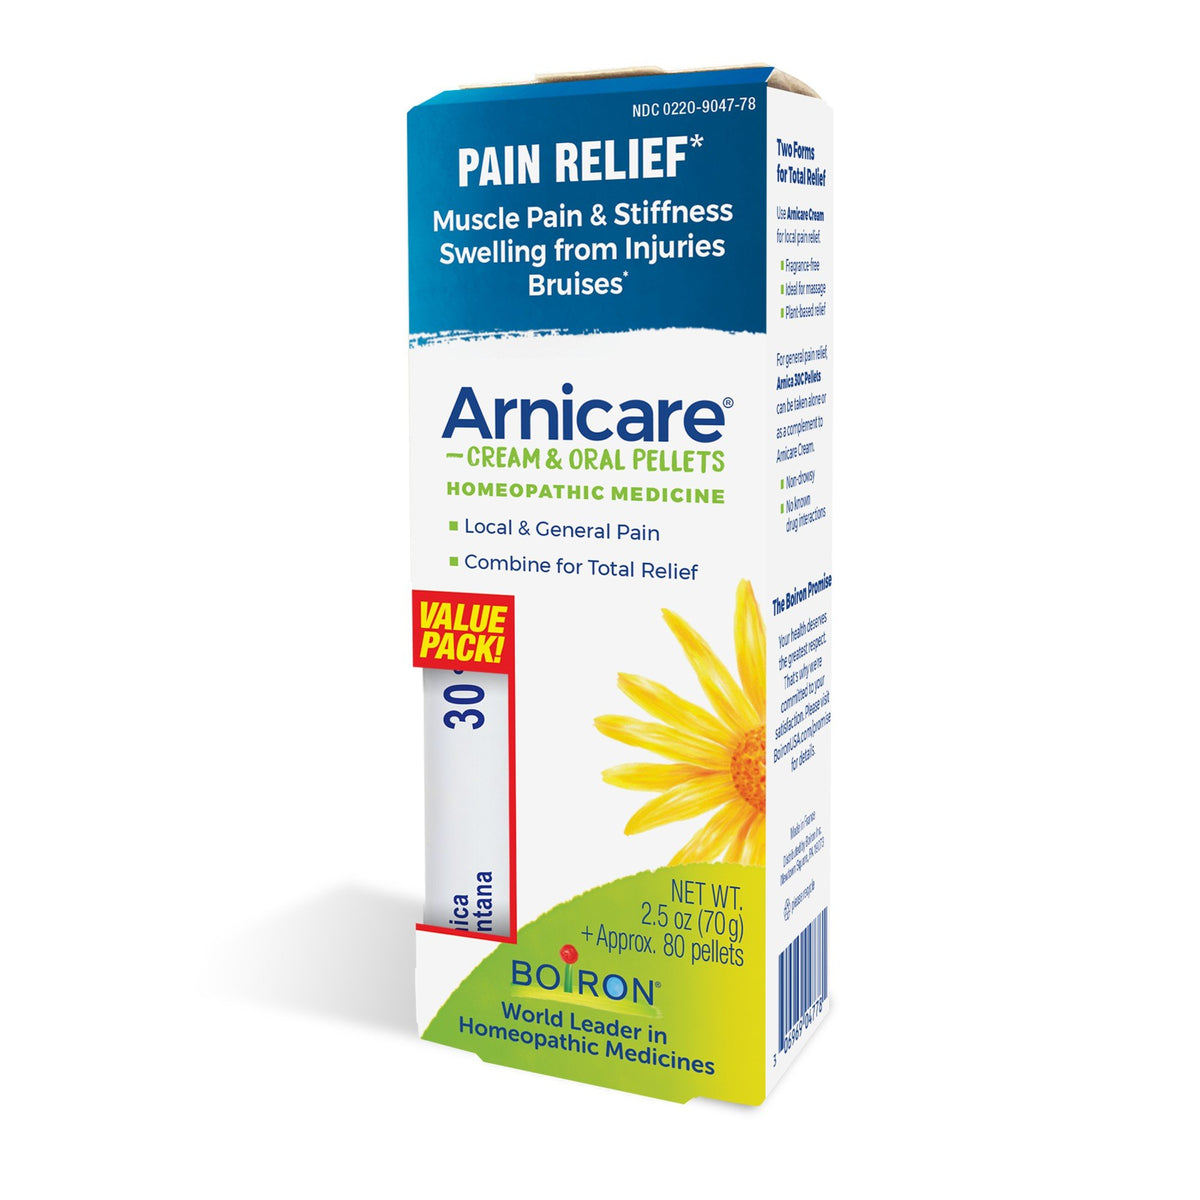 Boiron Arnicare Cream/MDT Value Pack Homeopathic Medicine For Pain Relief 2.5 oz + 80 Cream + Pellet